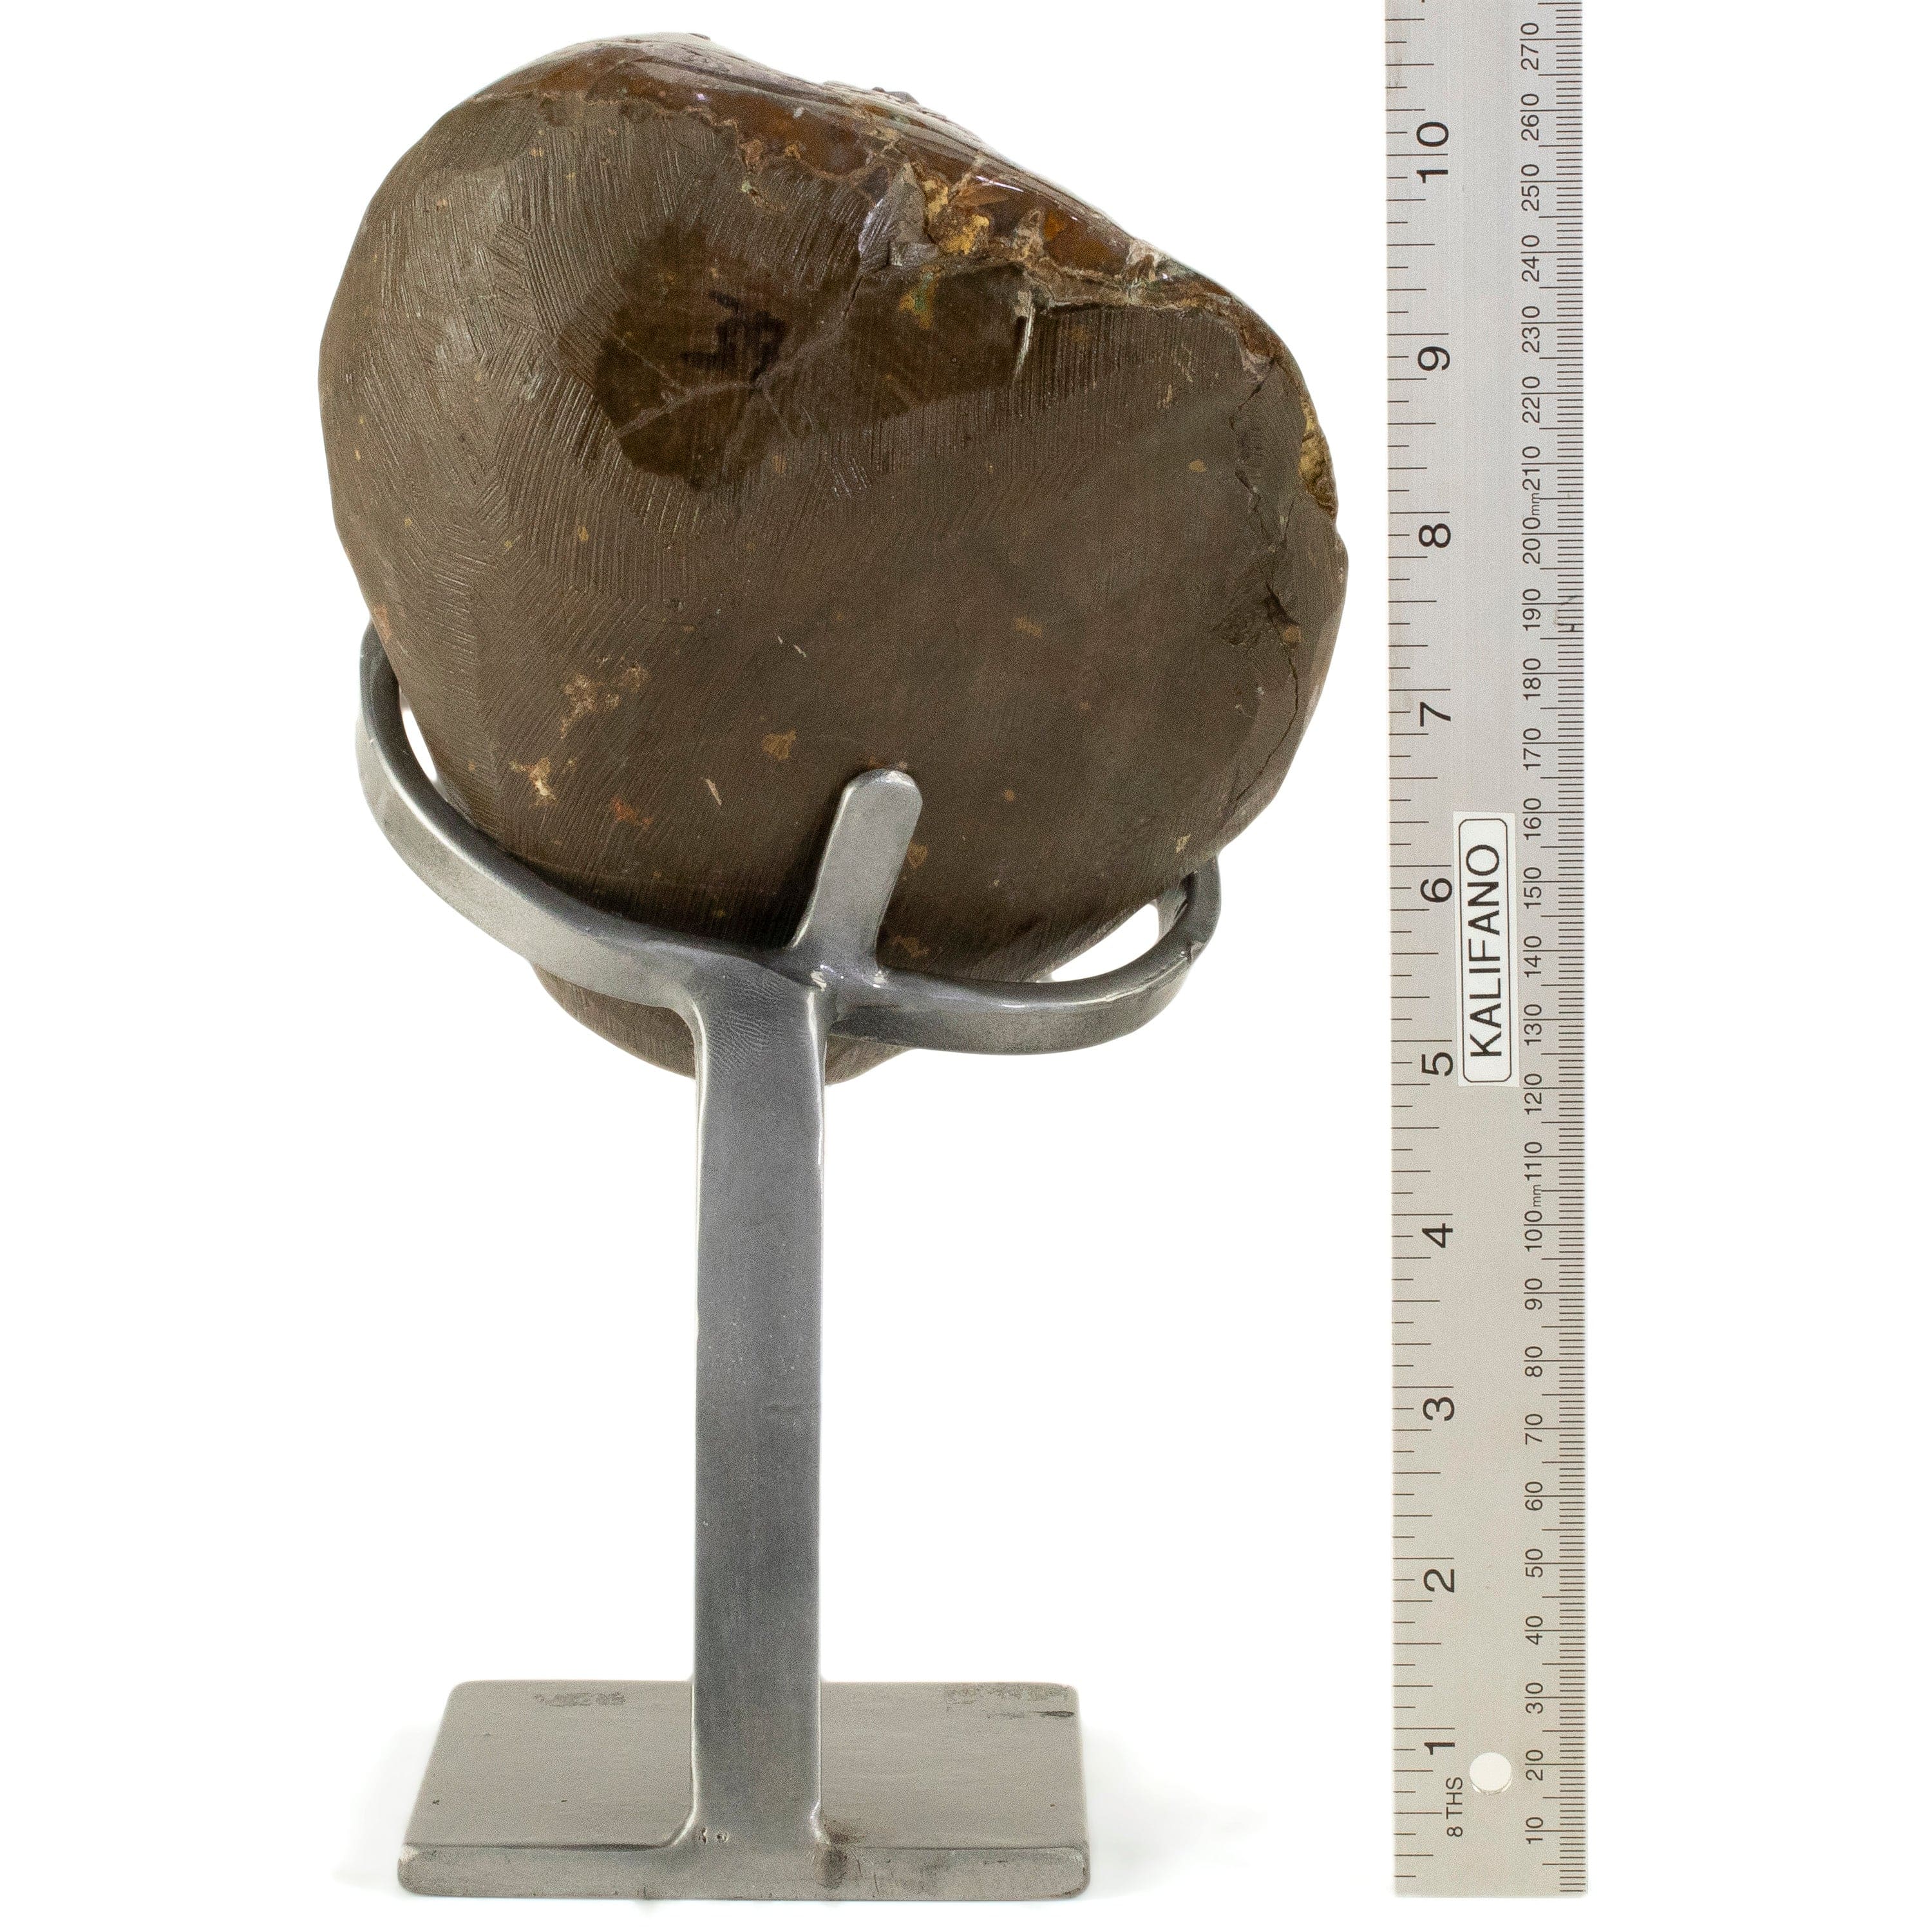 Kalifano Amethyst Uruguayan Amethyst Geode on Custom Stand - 7.7 lbs / 10.5 in. UAG3500.002